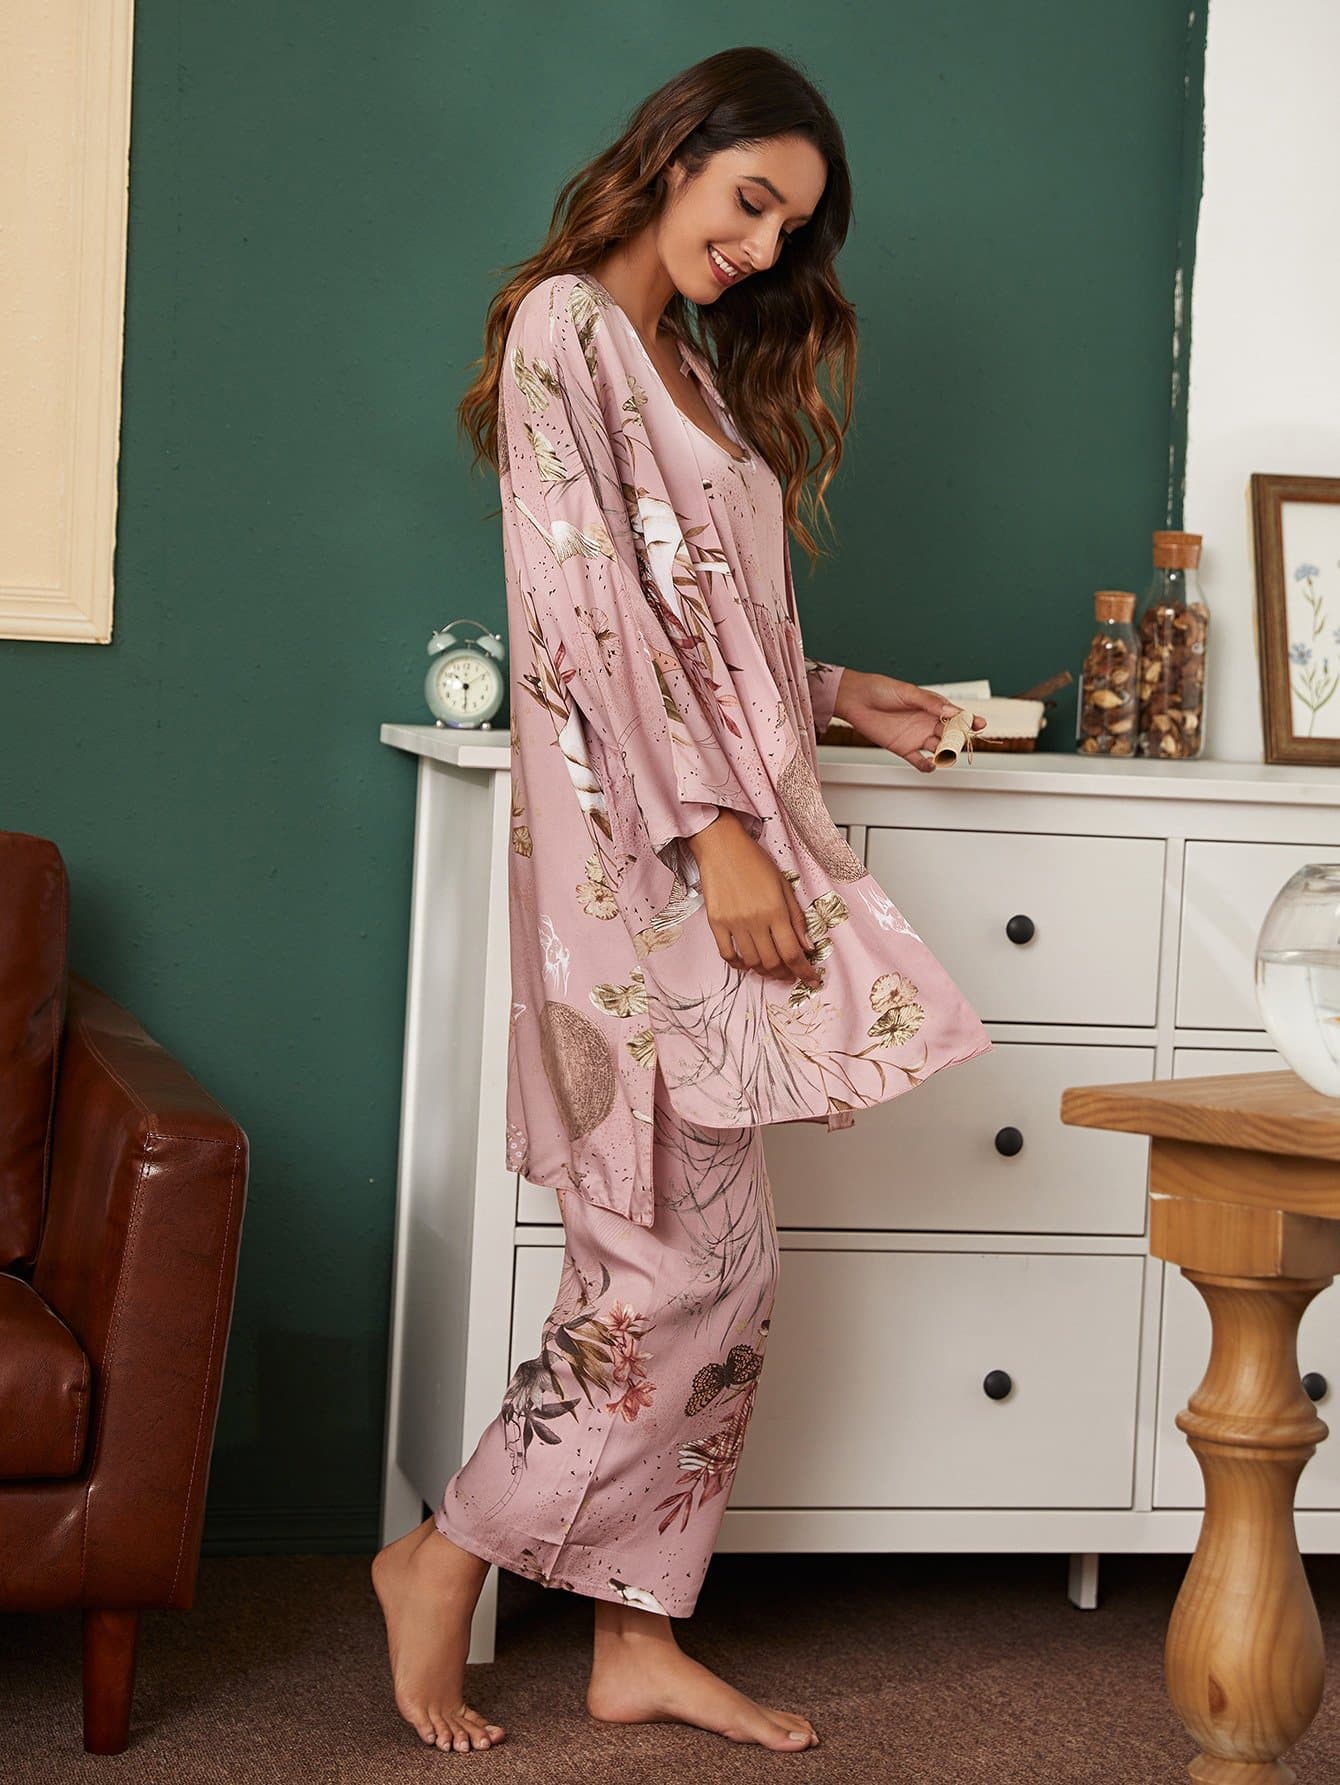 Spaghetti Strap 3pcs Plants and Animal Print Pyjama Sleepwear Set with Robe